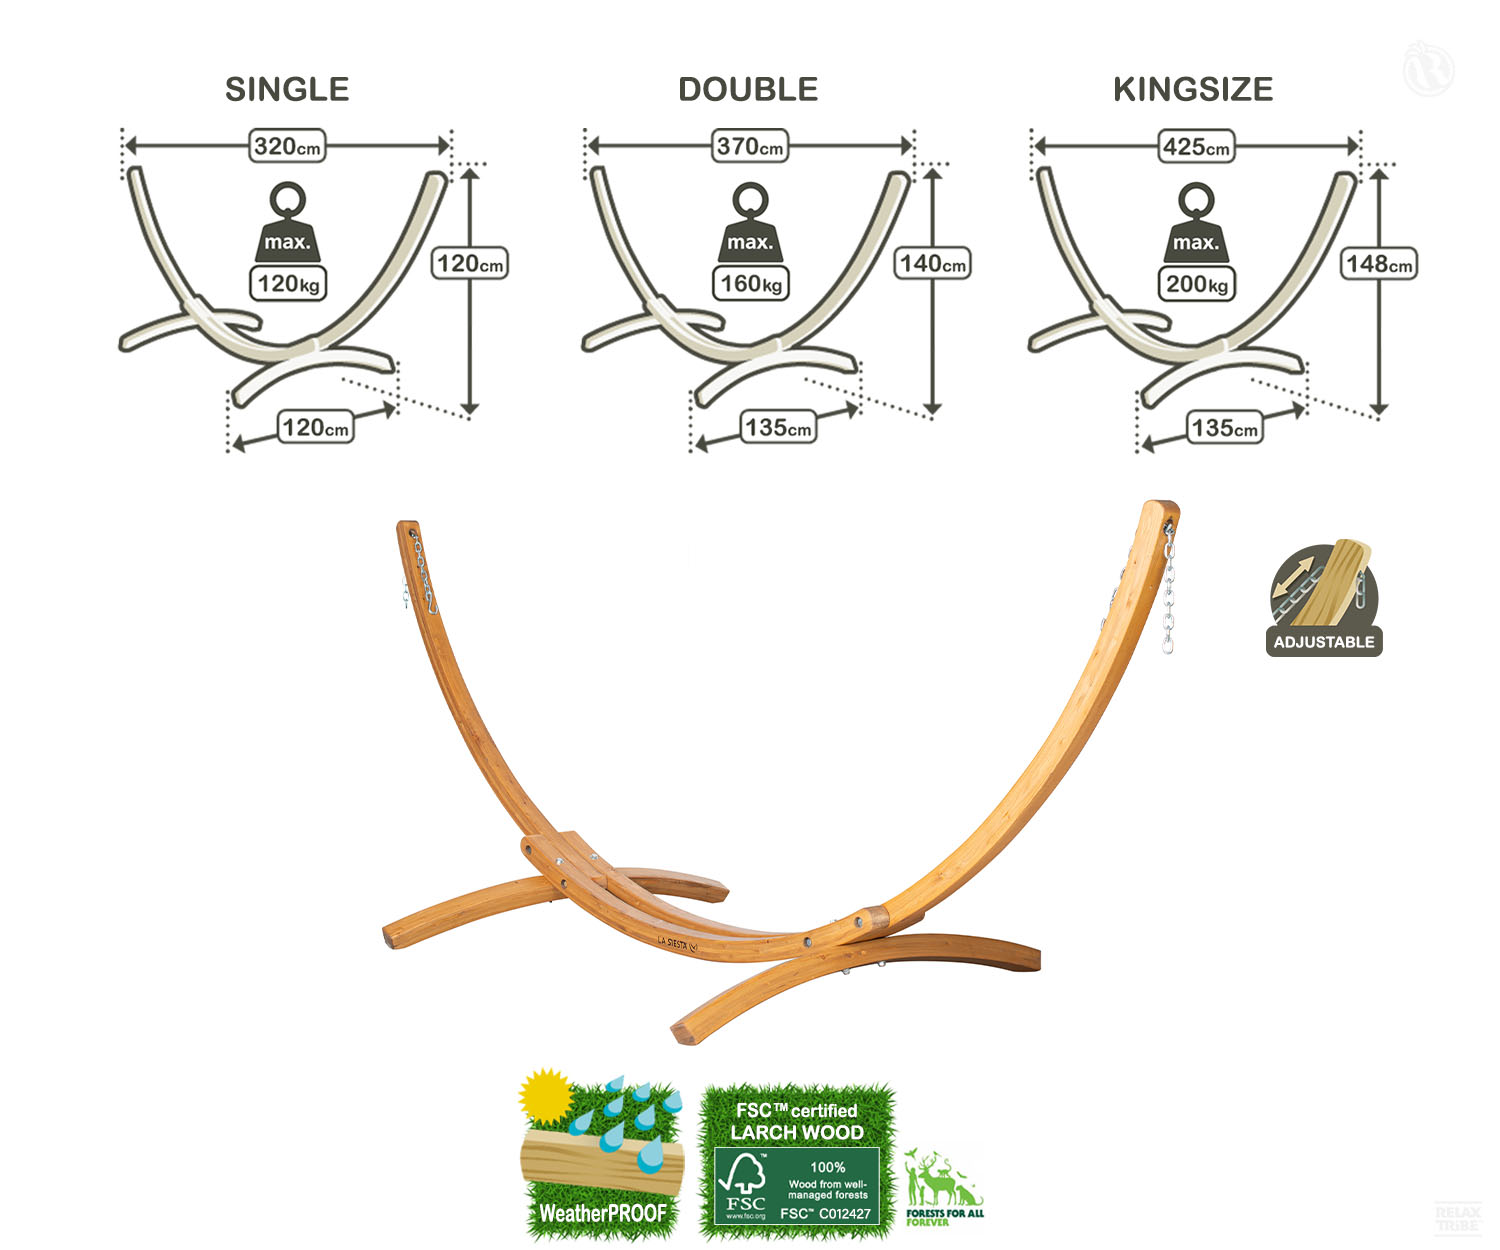 elipso-nature-fsc-wood-stand-for-hammock-single-double-kingsize-home-garden-weatherproof-natural-detail-spec